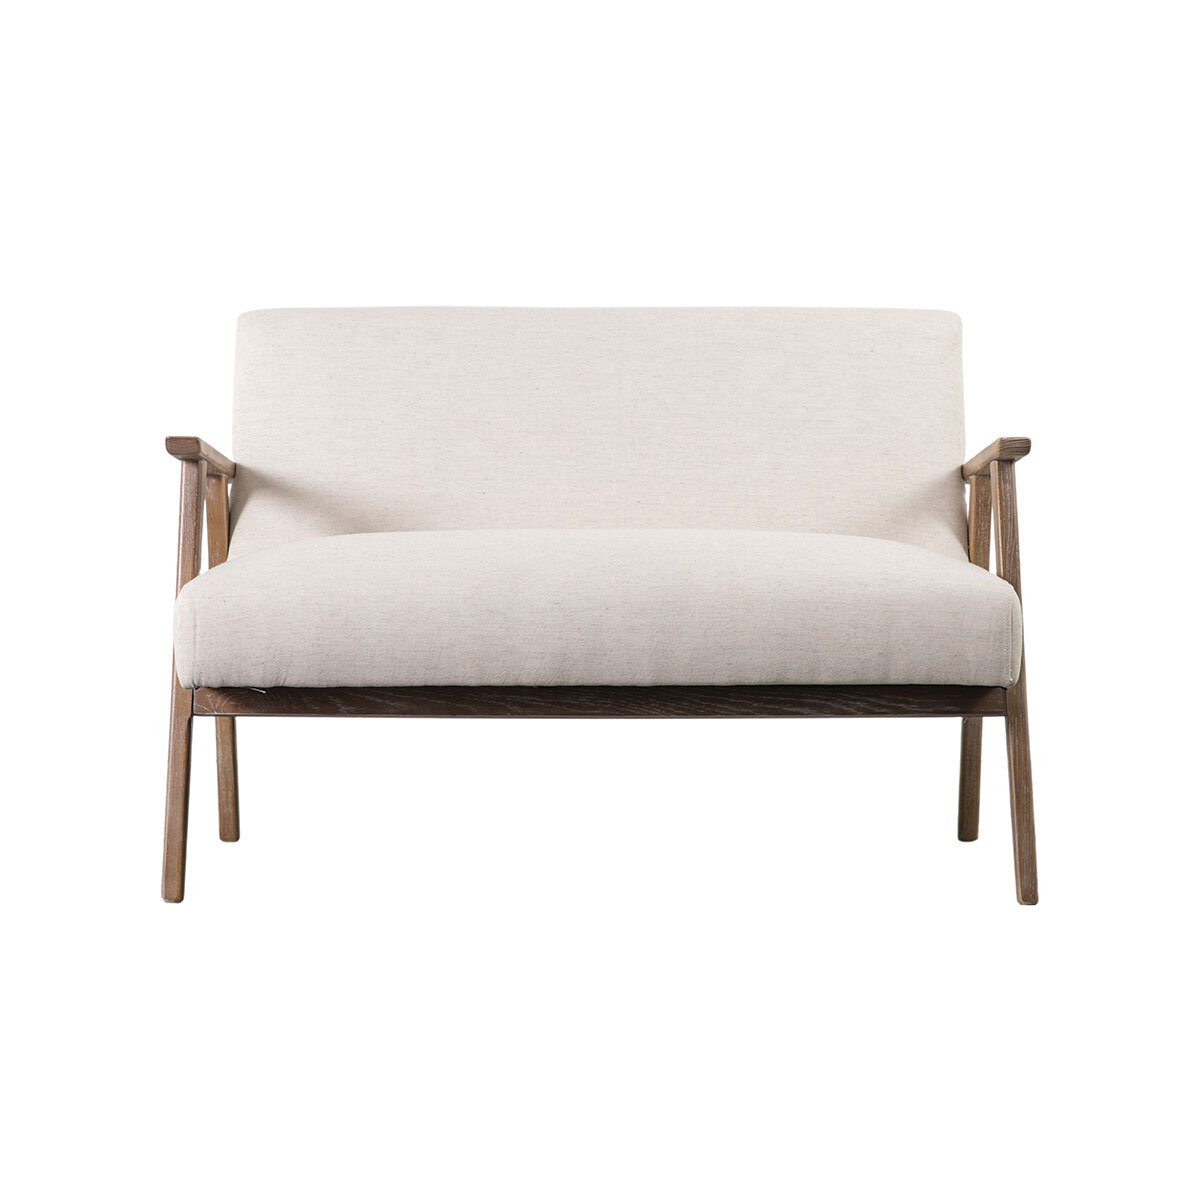 Gallery Neyland Natural Linen Sofa